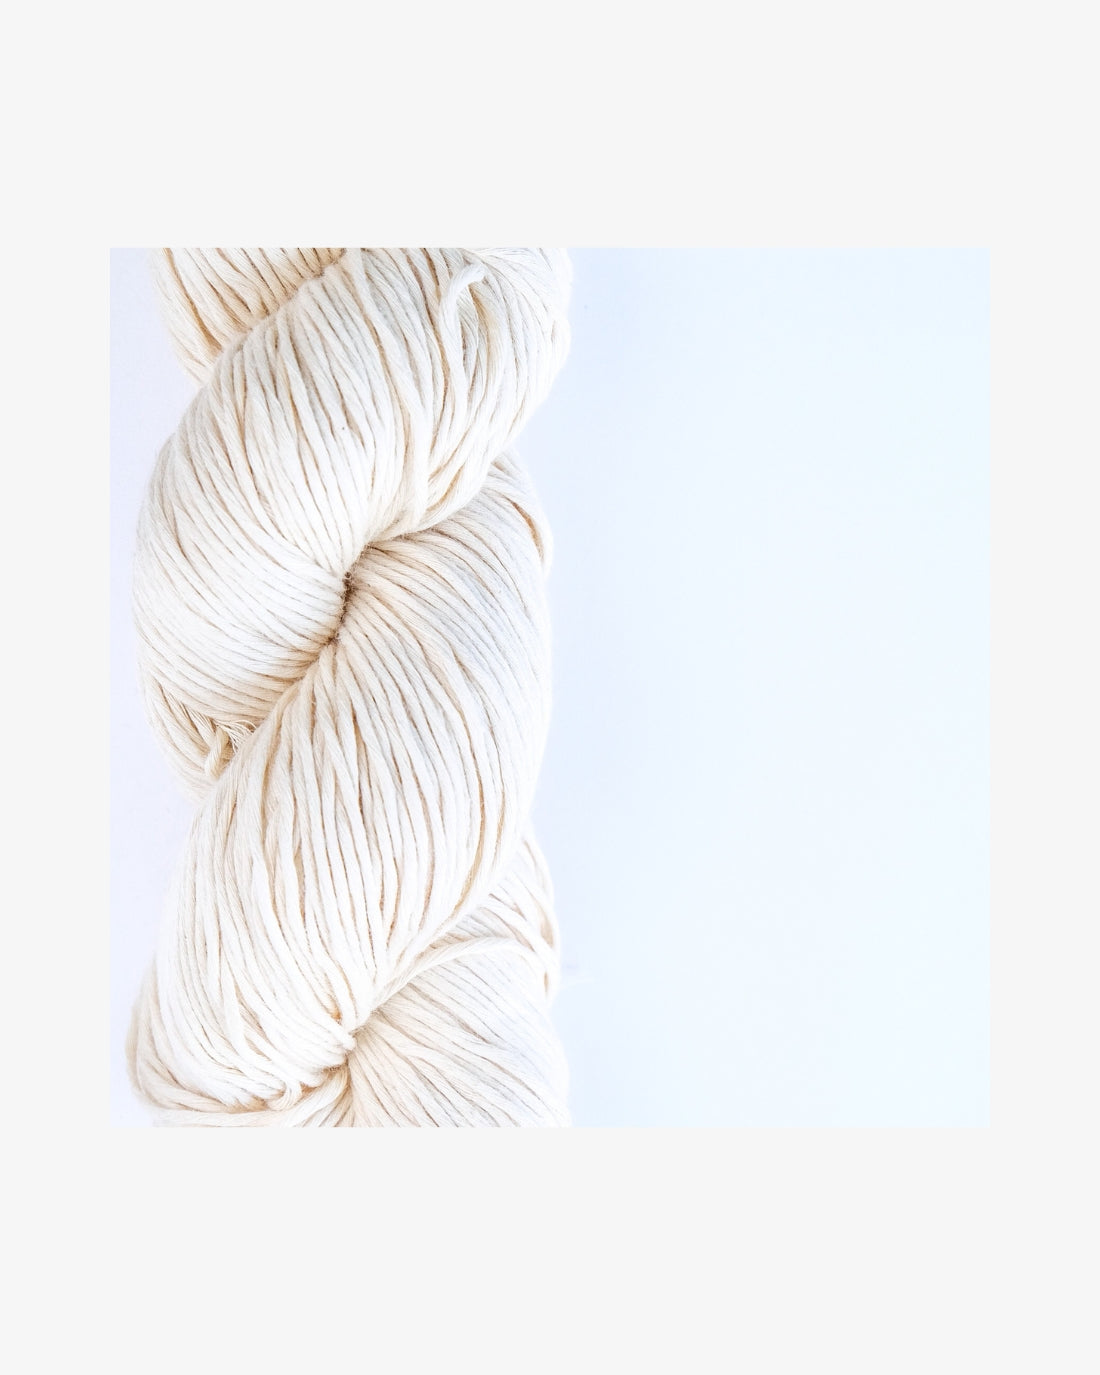 Hinoki Cypress Cotton by Habu Textiles